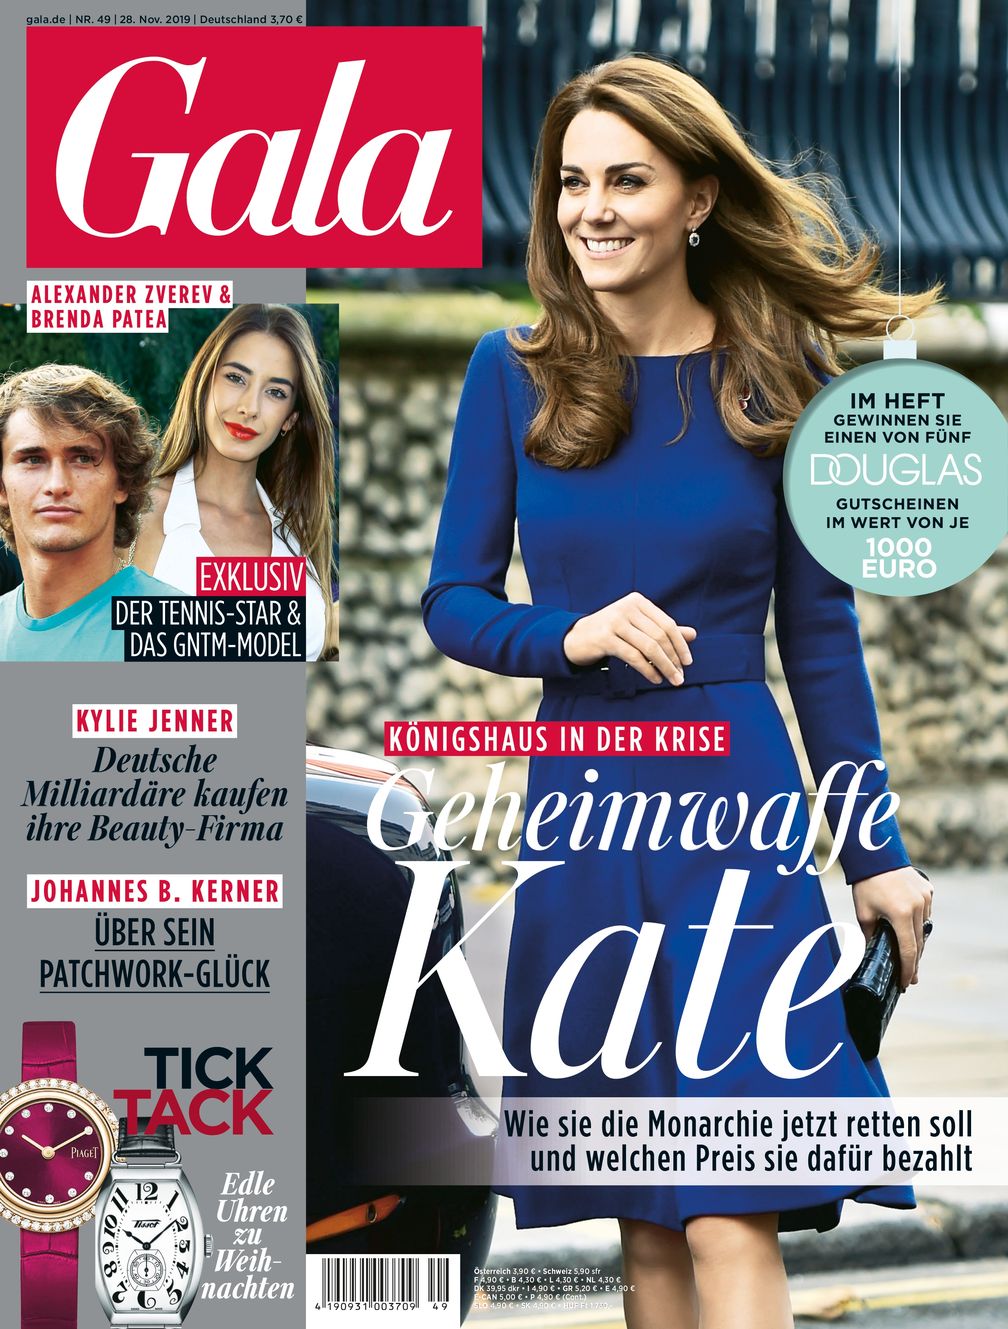 GALA Cover 49/2019 (EVT: 28. November 2019). Bild: "obs/Gruner+Jahr, Gala"